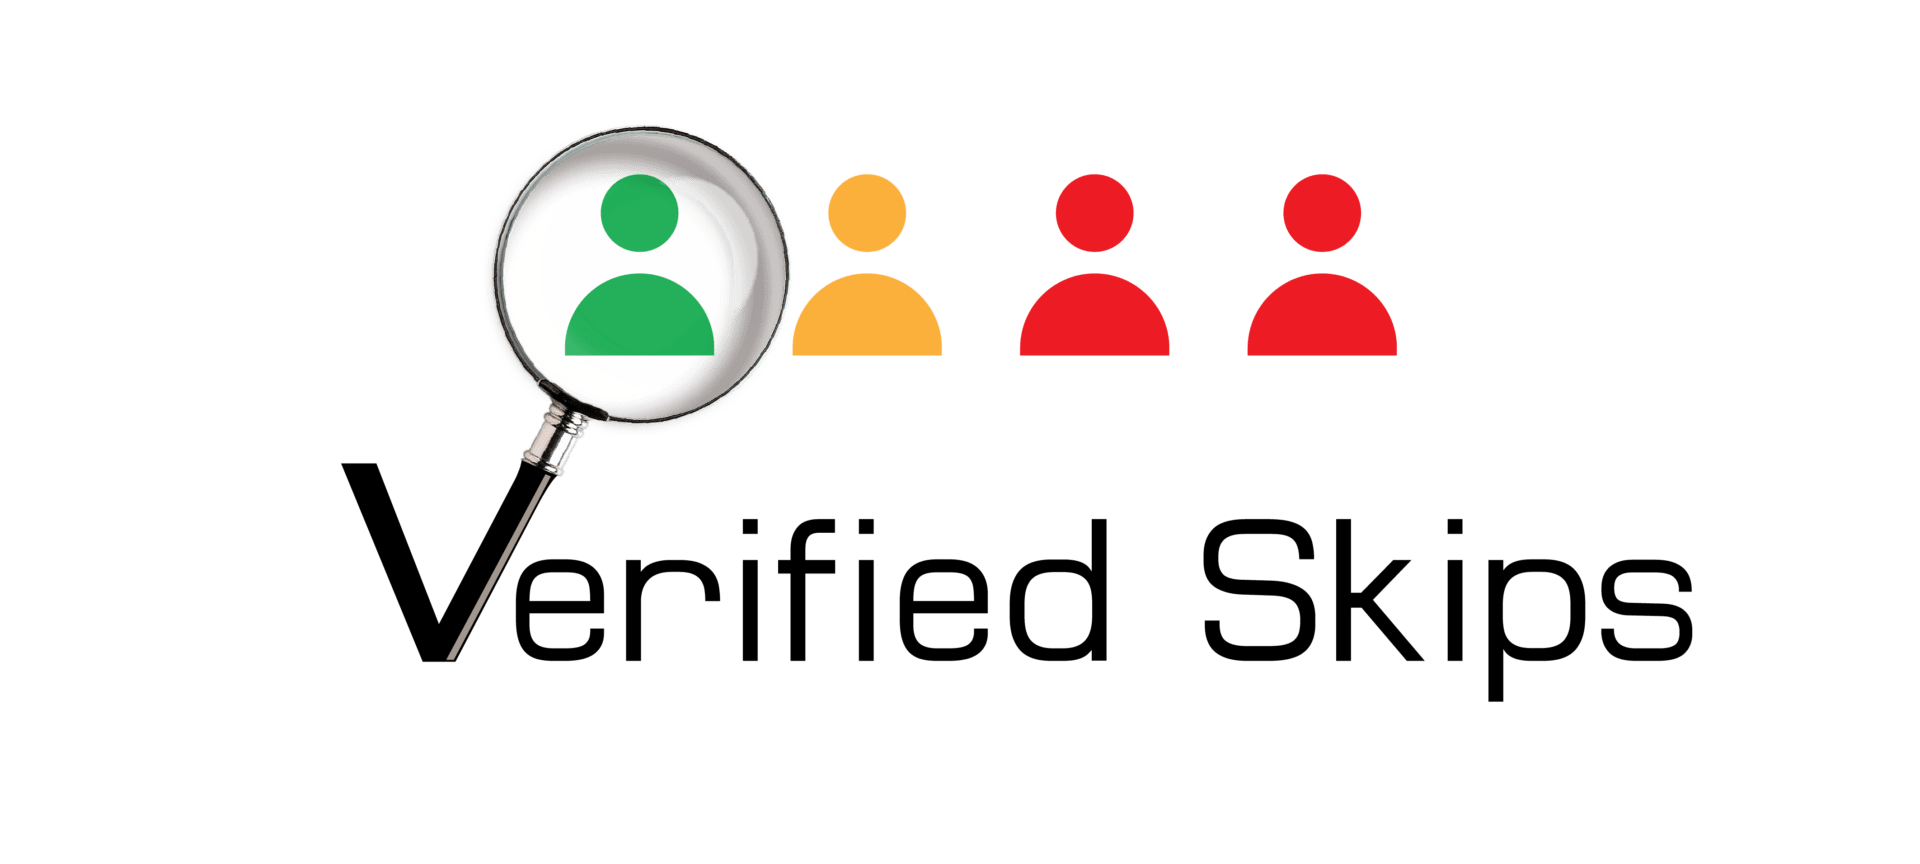 verified skips logo-01-01